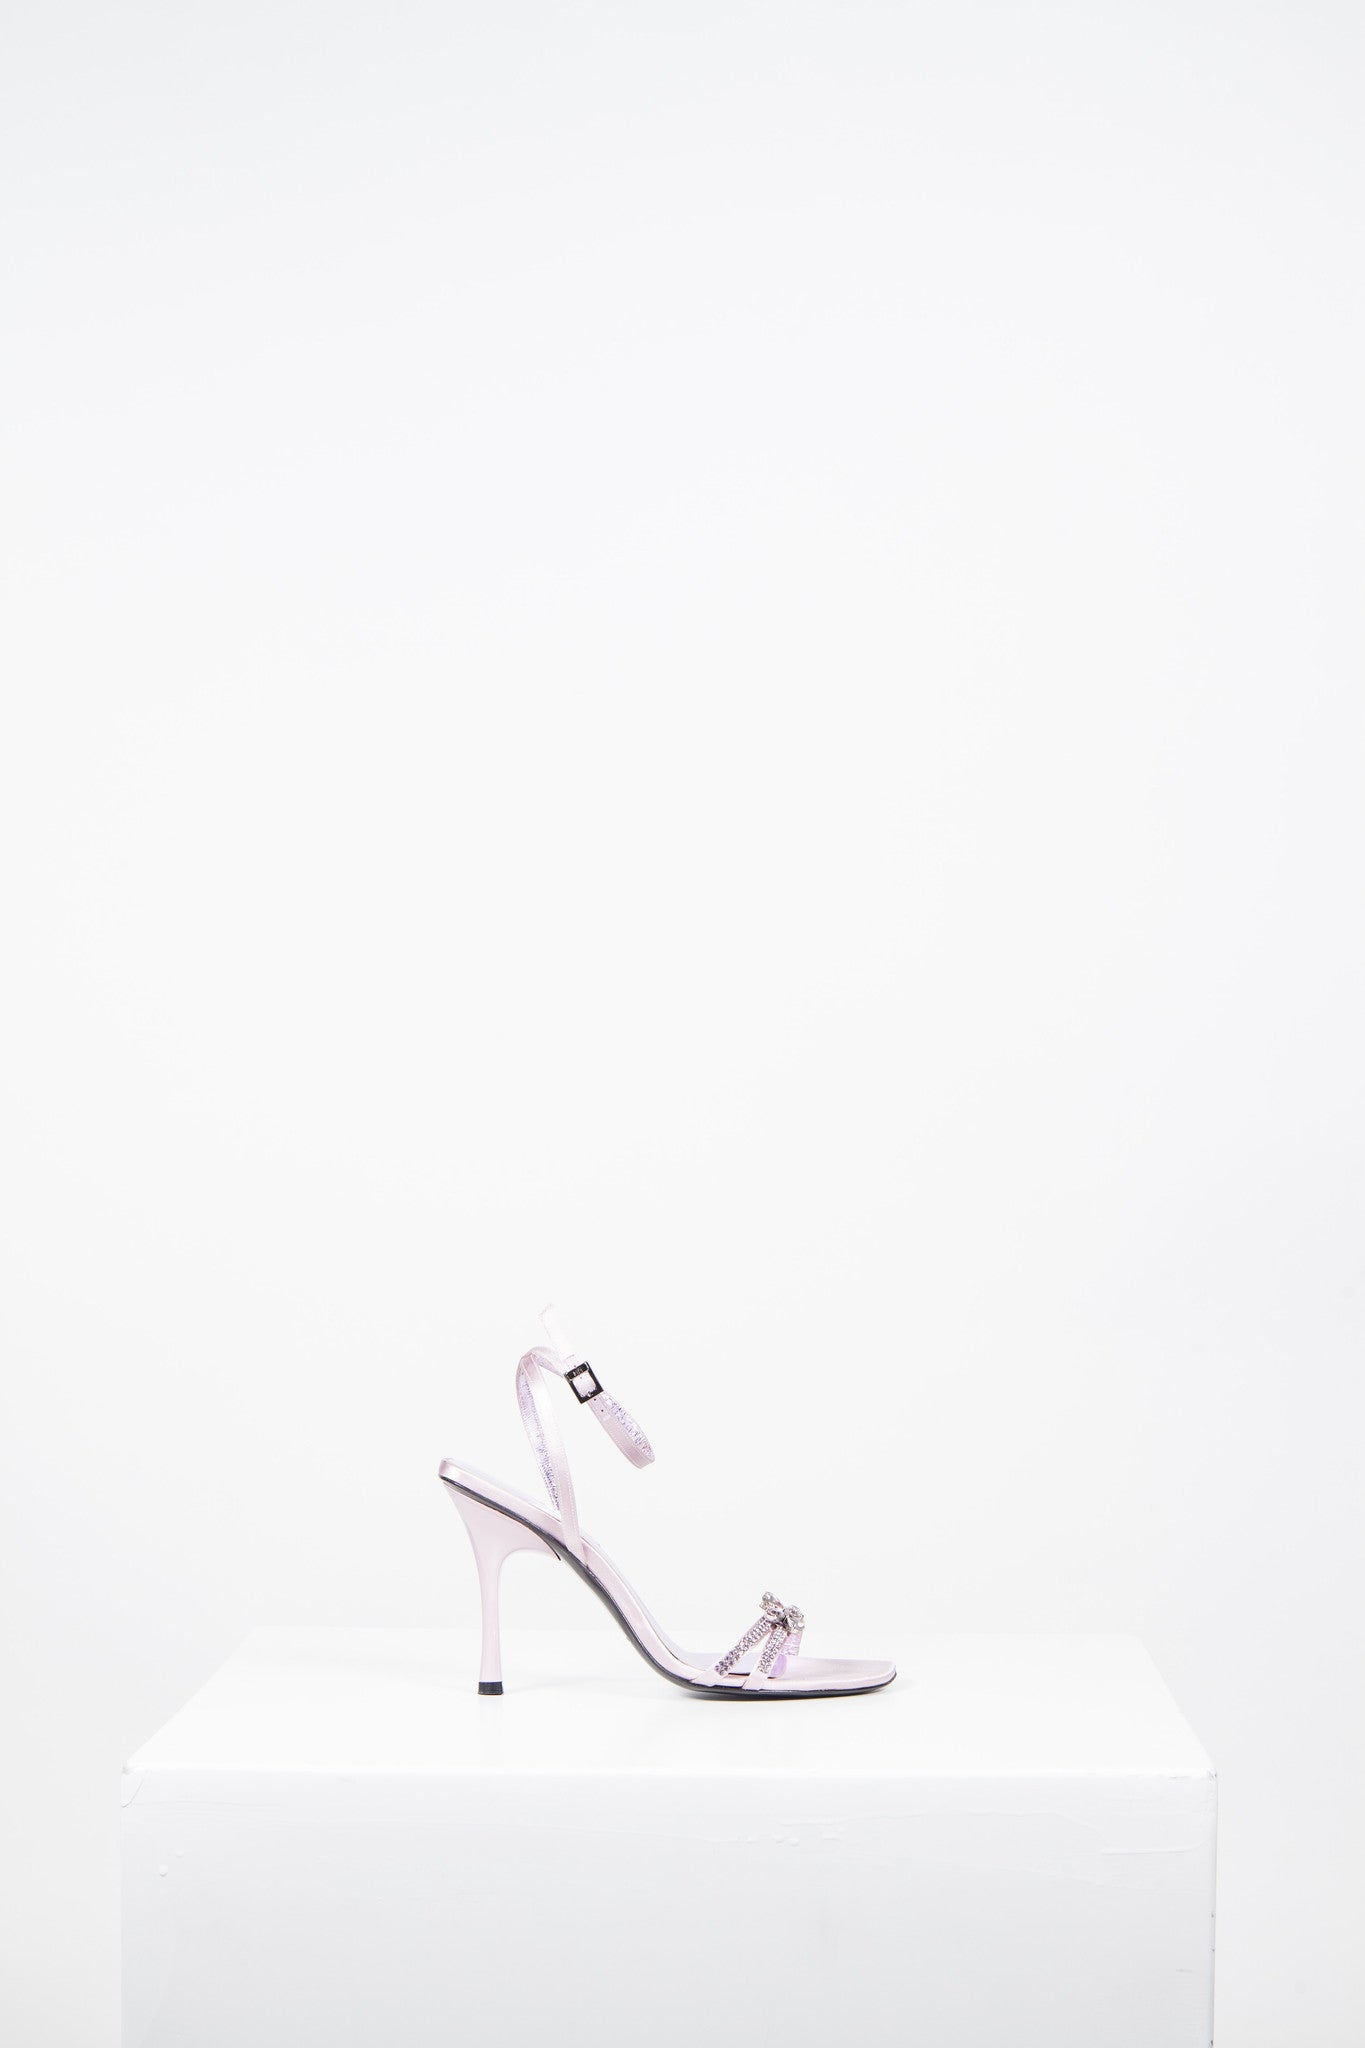 Isabella's Wardrobe Sonia Rykiel Diamante butterfly sandals.